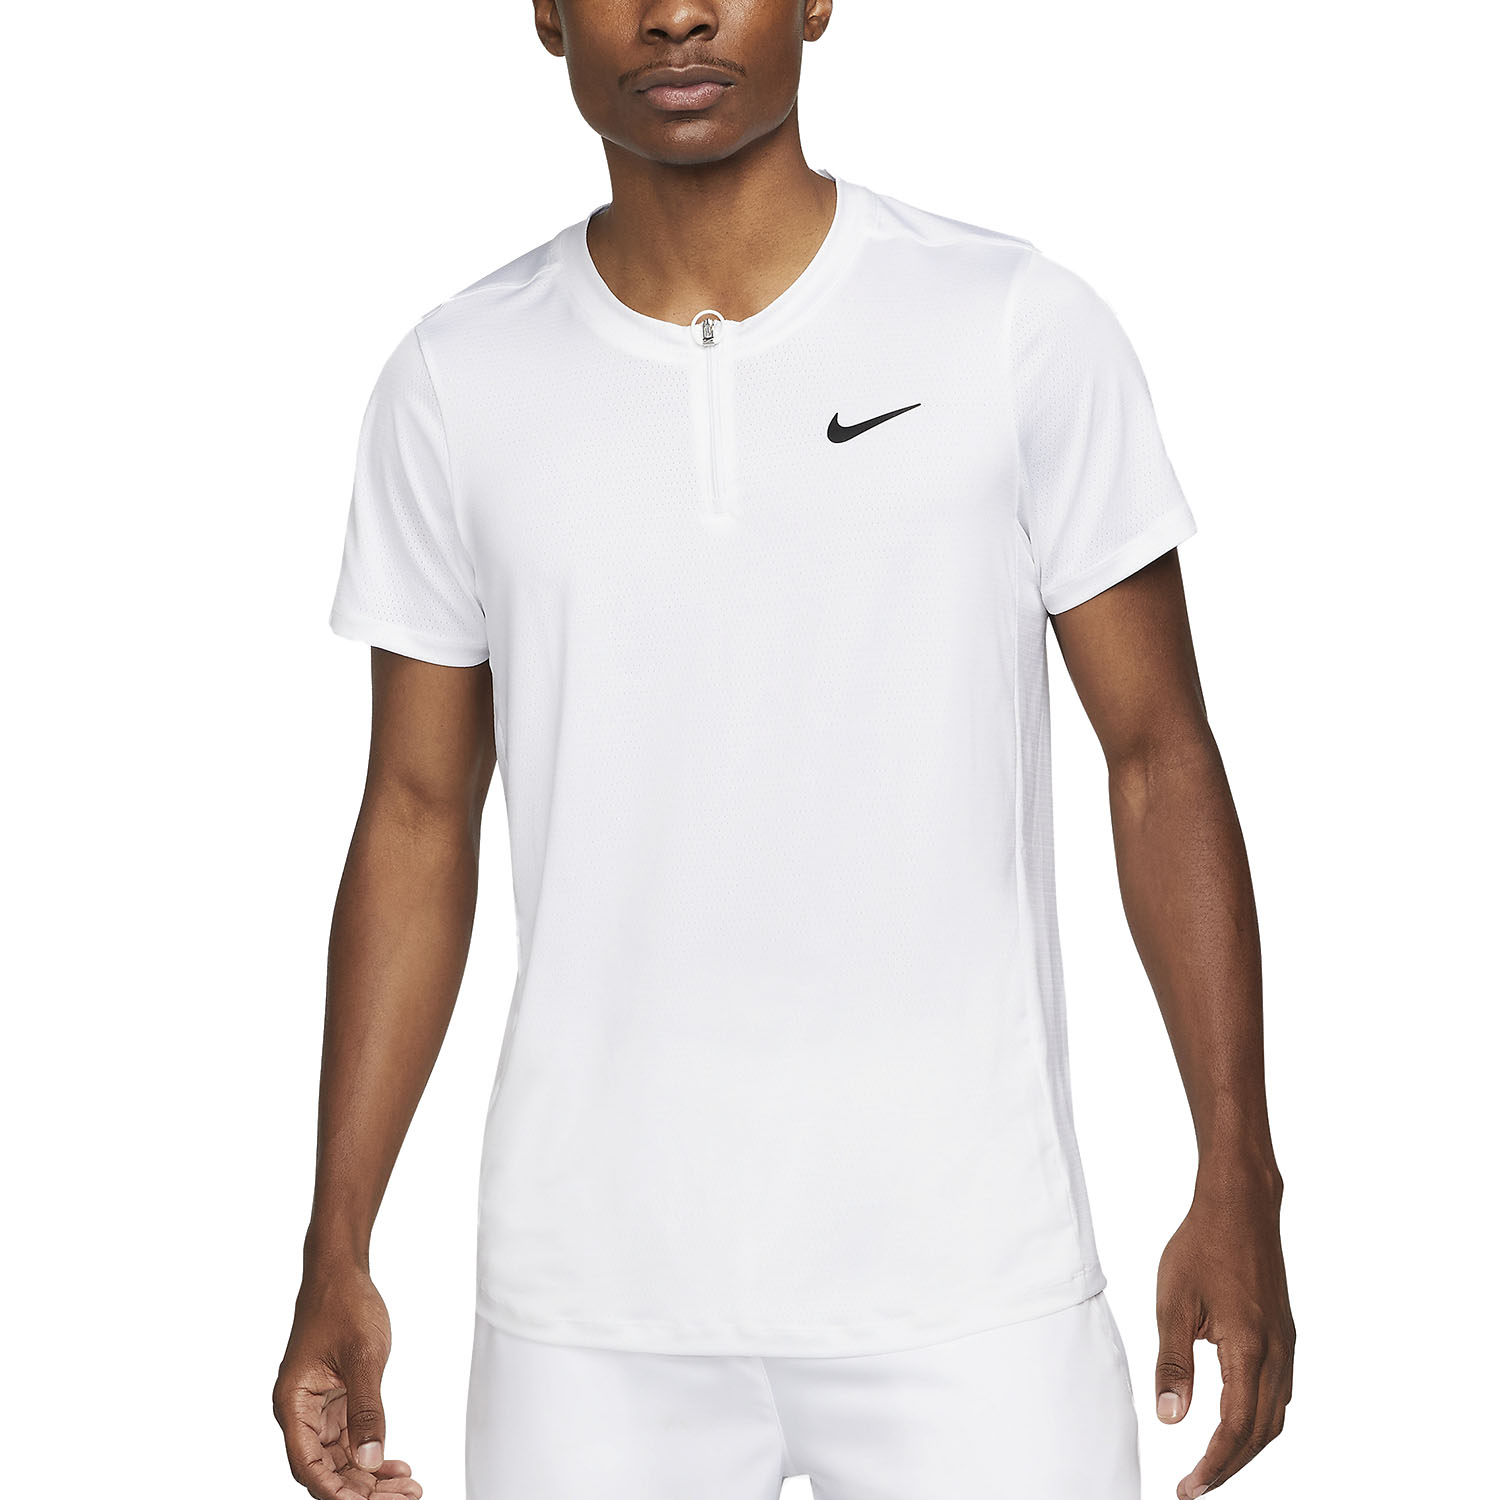 Acuario innovación Ver insectos Nike Dri-FIT Advantage Polo de Tenis Hombre - White/Black